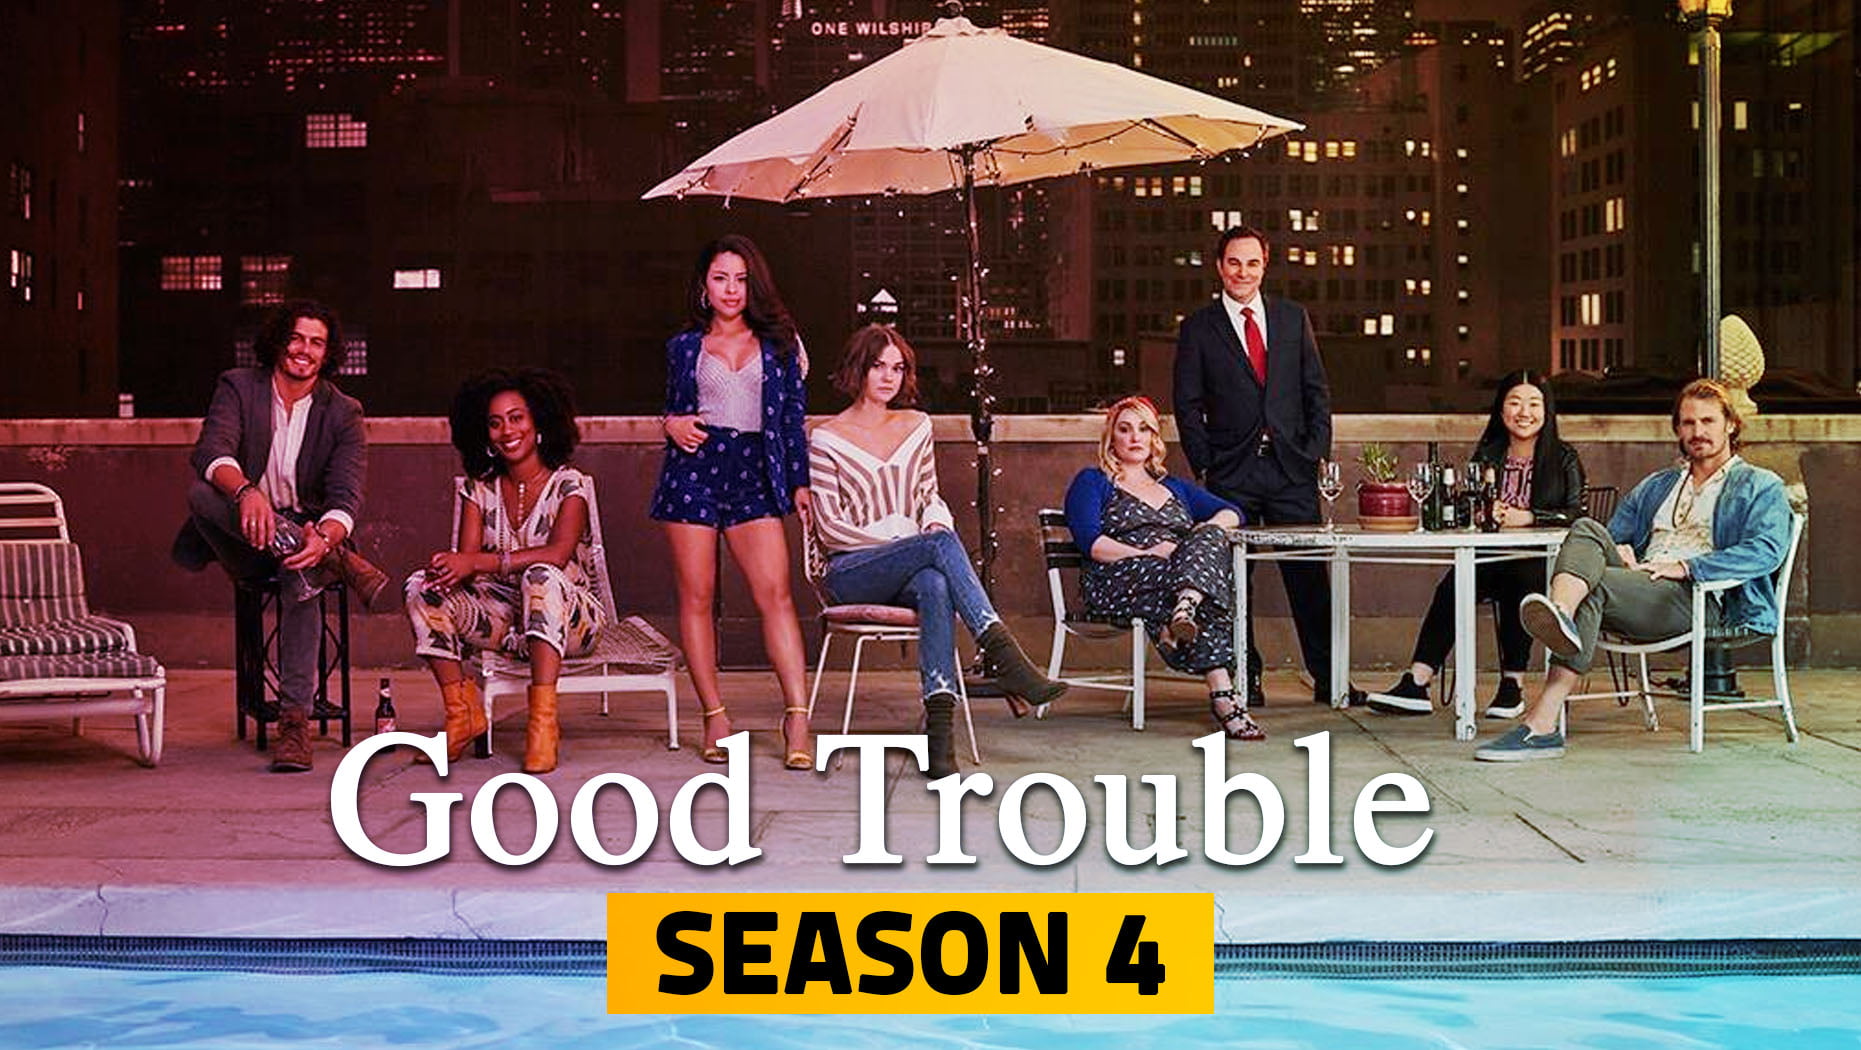 ‘Good Trouble’ series renewed for season 4 at Freeform